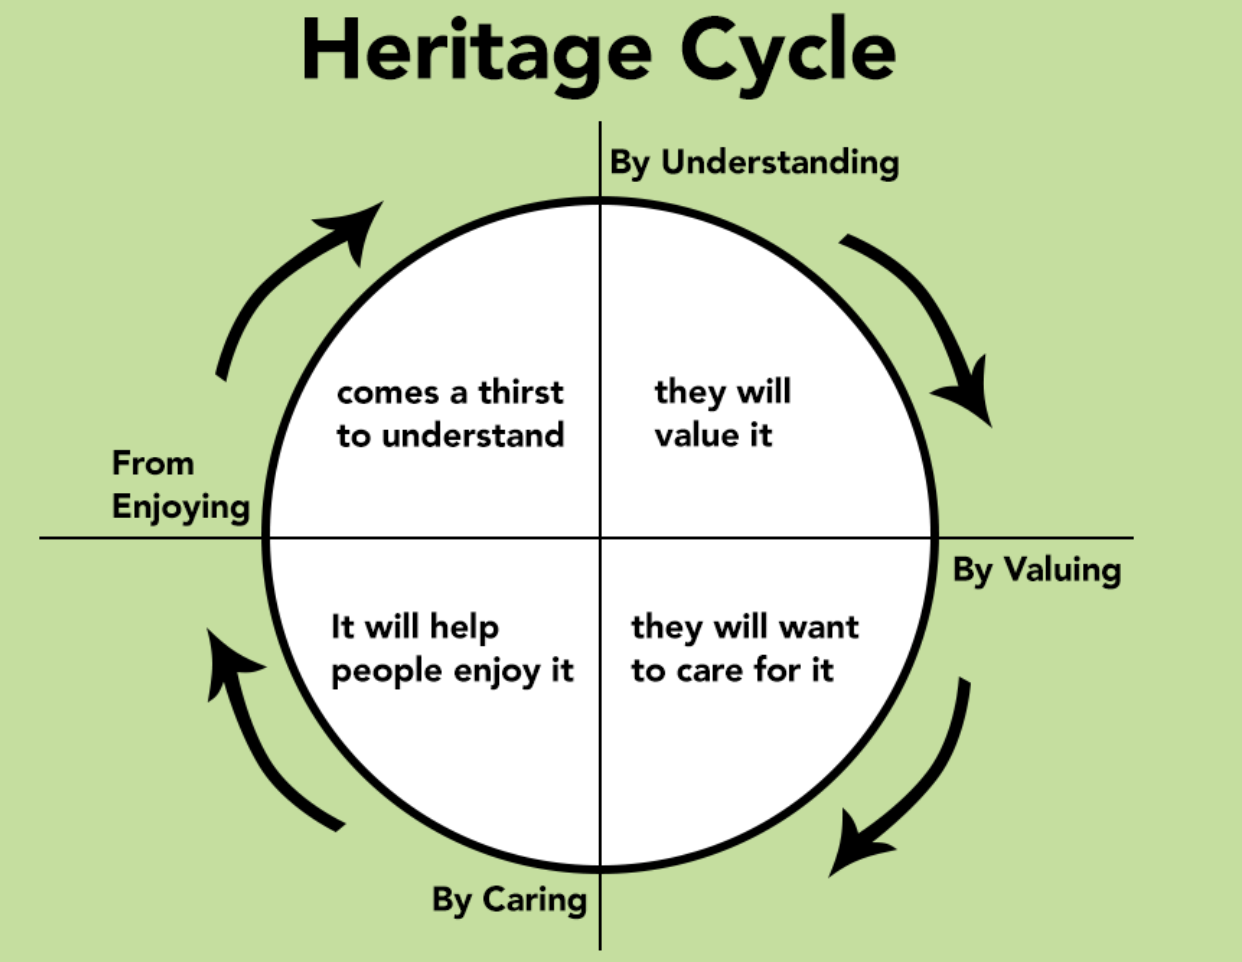 Cultural Heritage перевод. Understand или understanding. Heritage перевод. Cycle перевод. Перевести understand